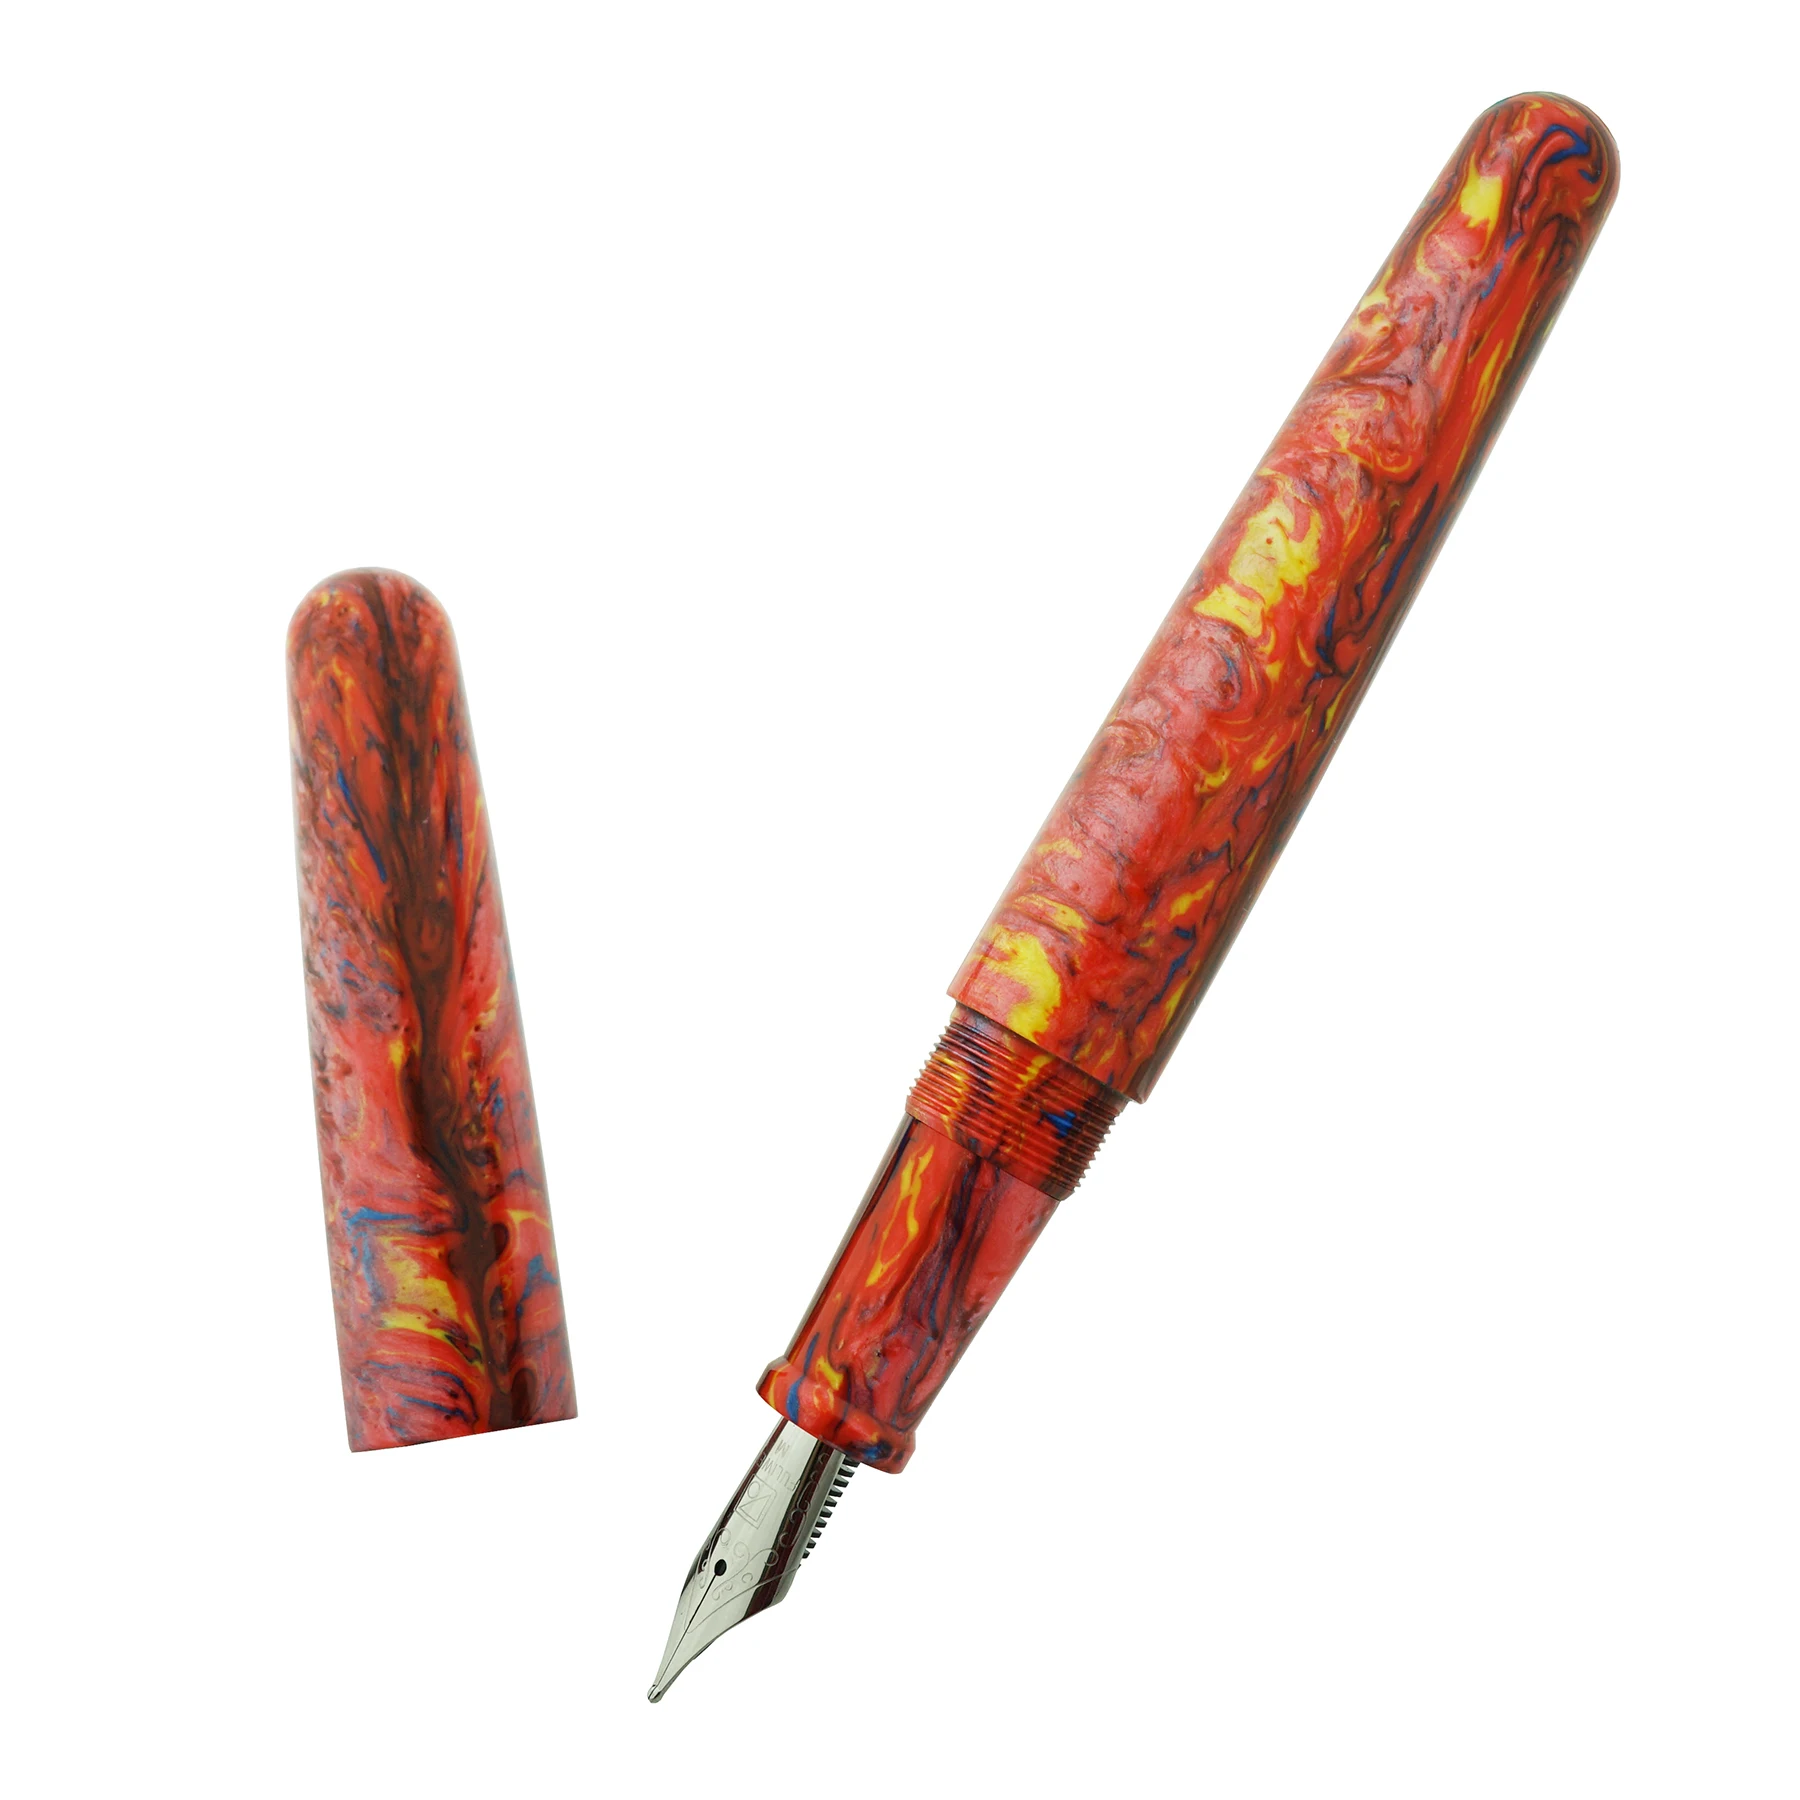 Details about   Fuliwen 2051 Fountain Pen Fine Nib Red Barrel & Sliver Clip Gift Pen 